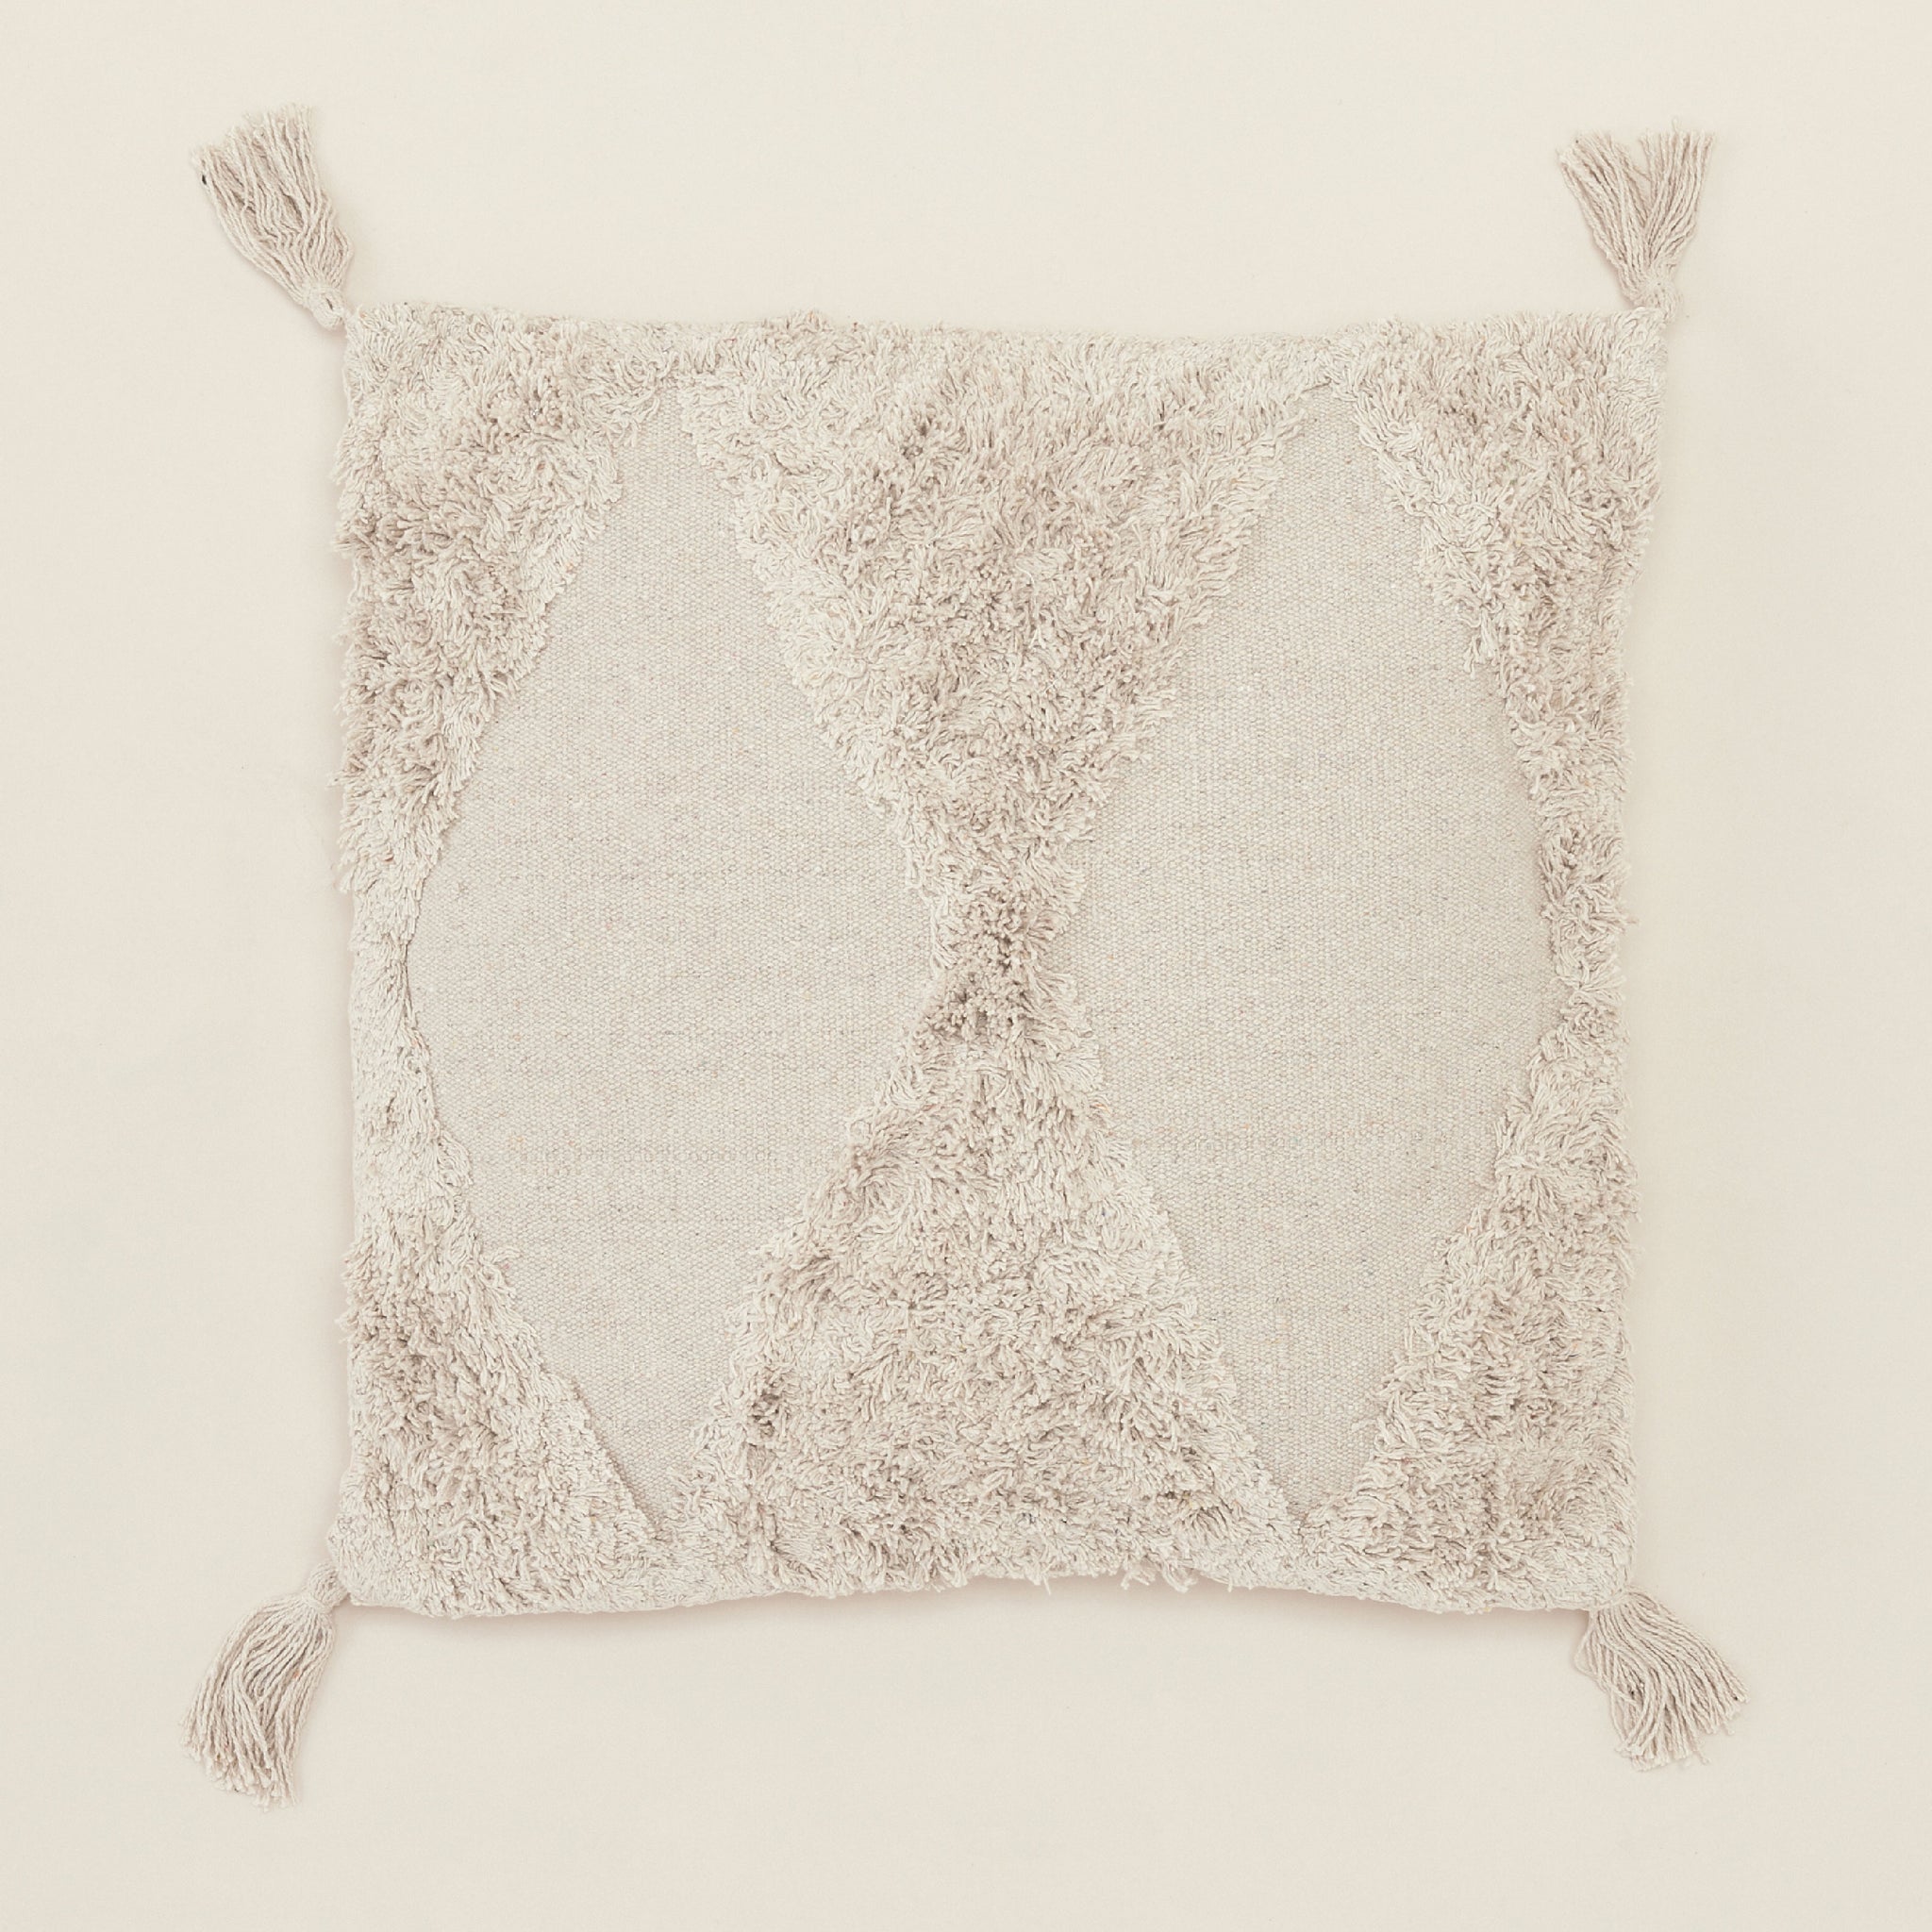 Light Beige  Hand-Woven Cotton Cushion | หมอนอิงพร้อมปลอก ประดับพู่